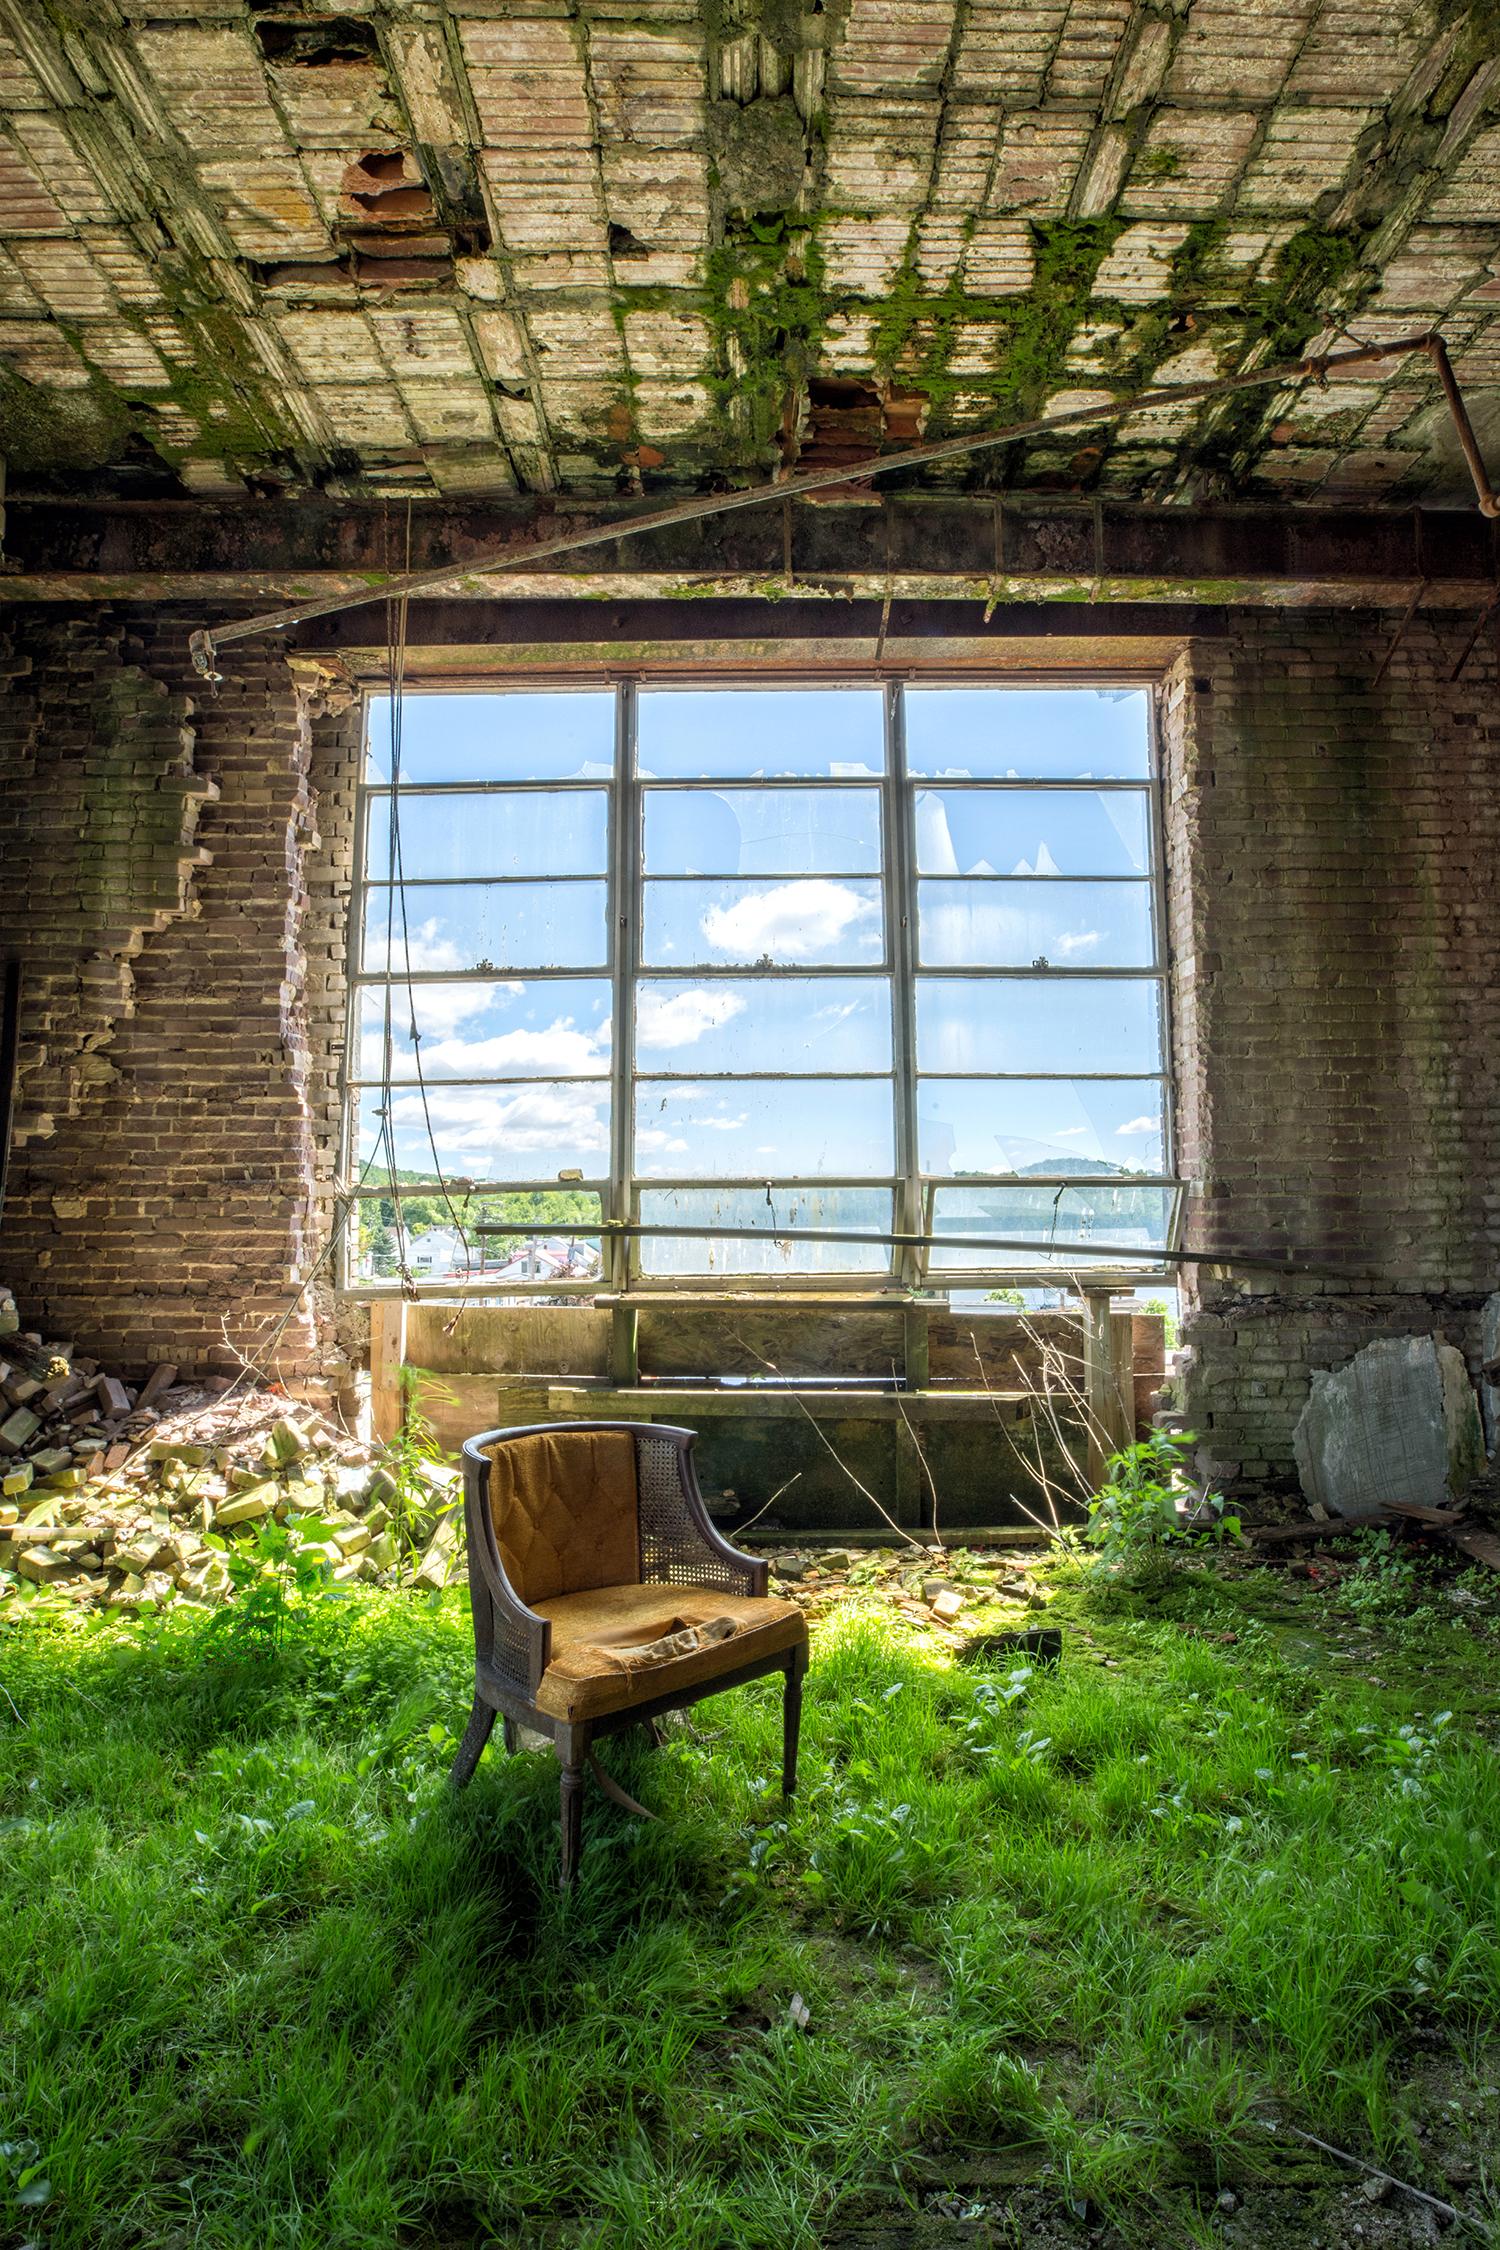 Rebecca Skinner Color Photograph - "Exist", contemporary, interior, chair, grass, brick, window, green, photograph